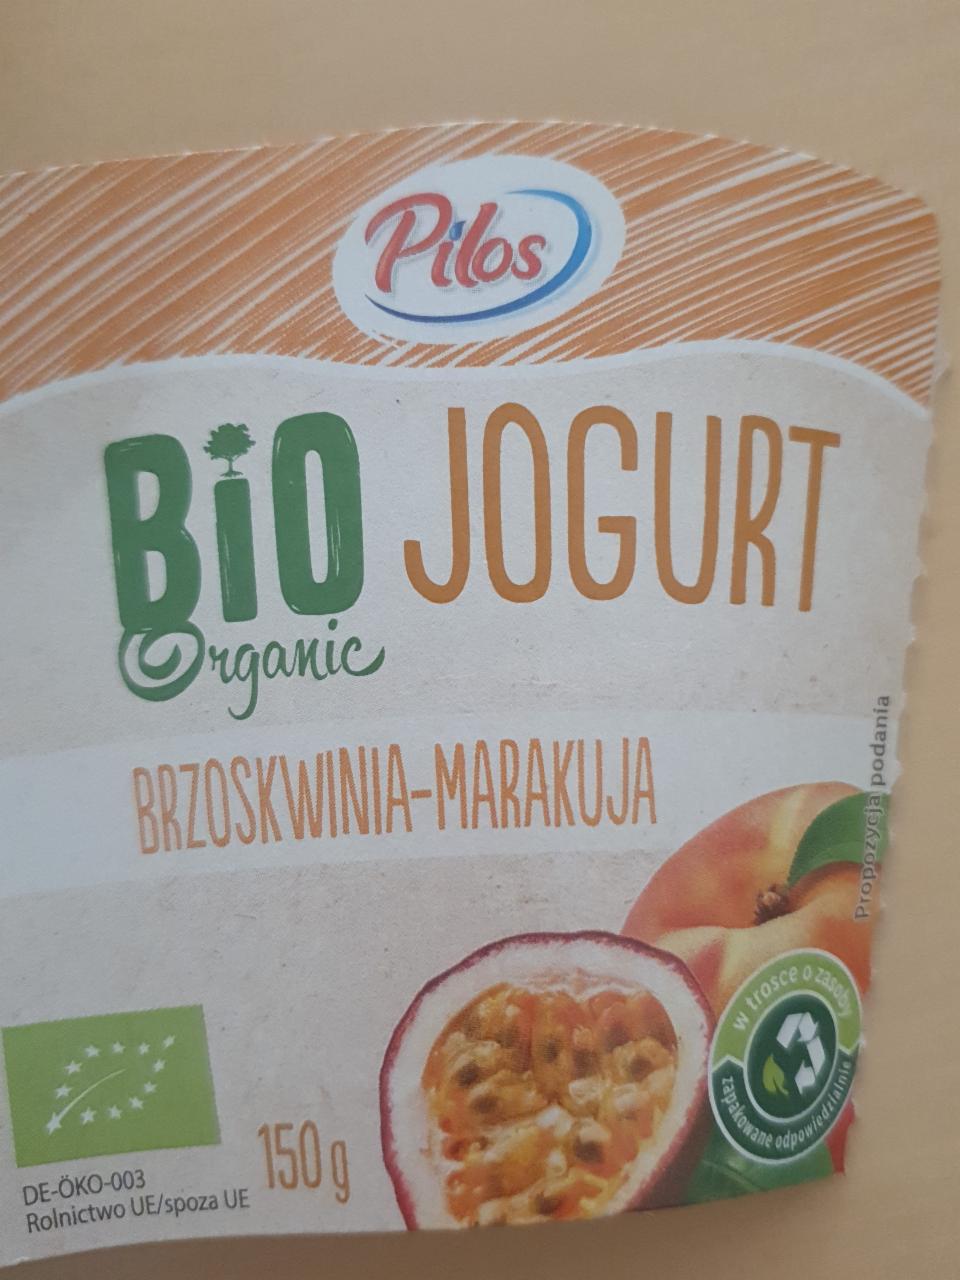 Zdjęcia - BioJogurt Pilos brzoskwinia-marakuja